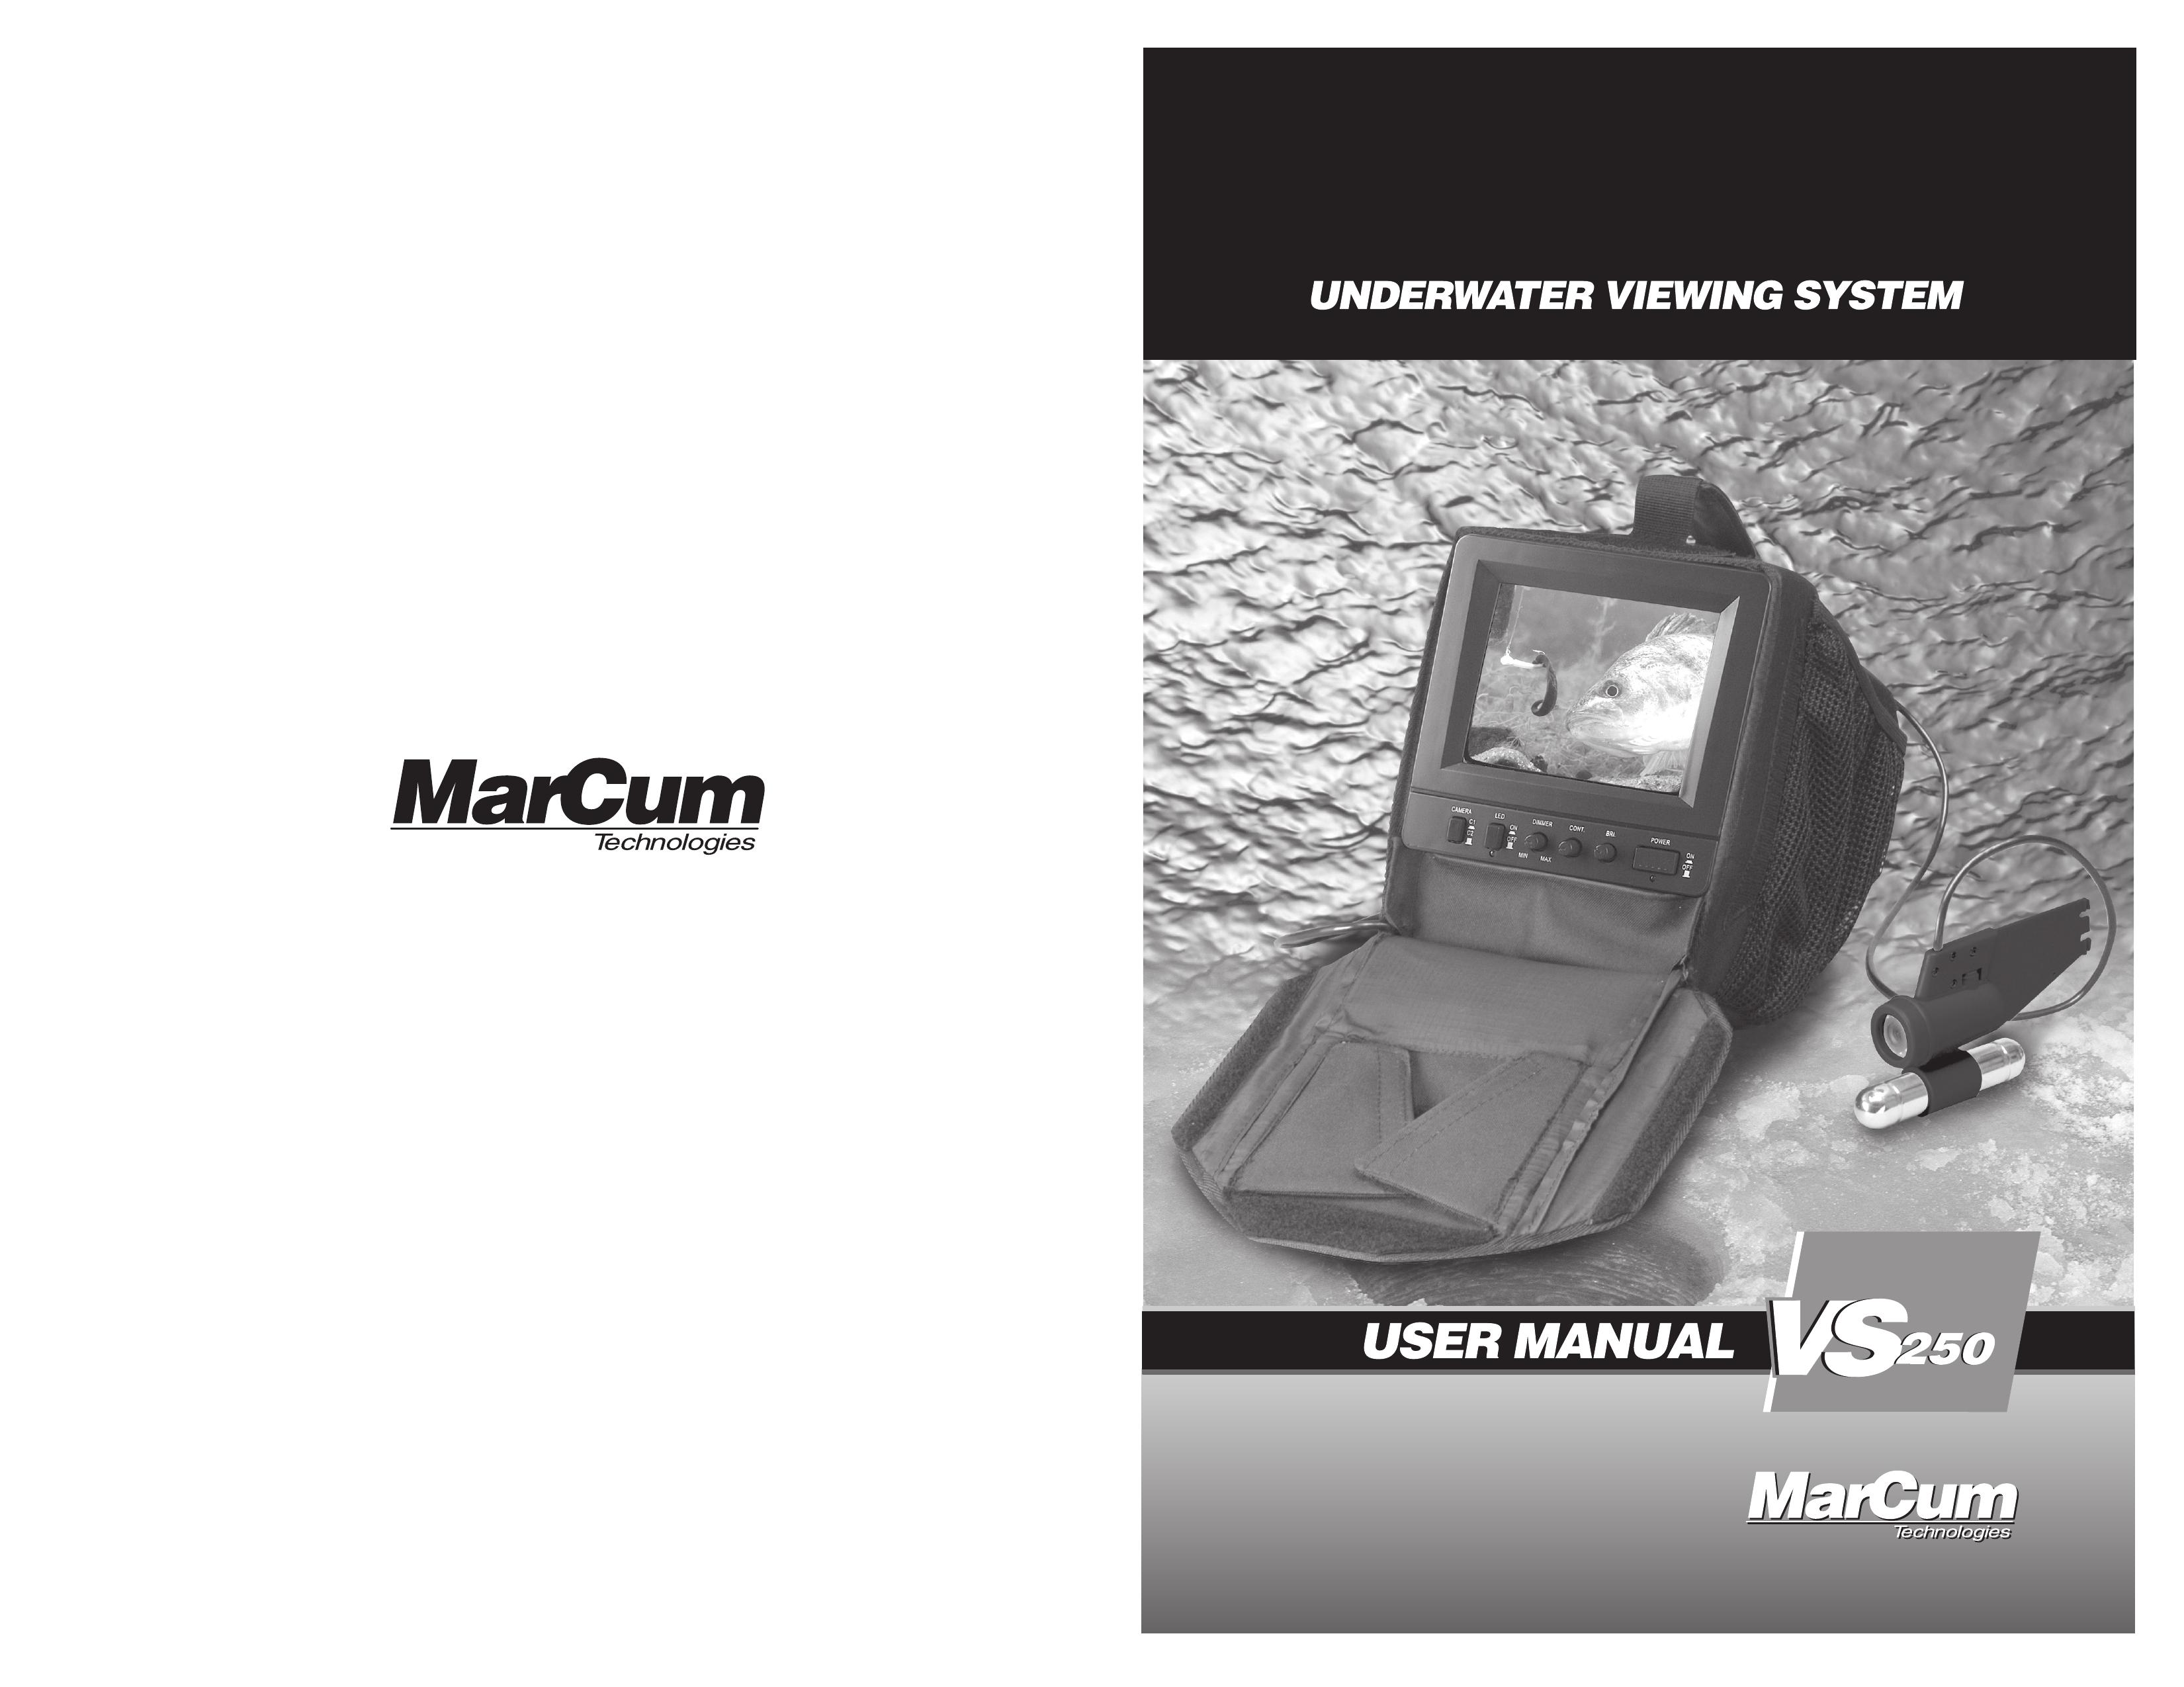 Marcum Technologies VS250 Film Camera User Manual